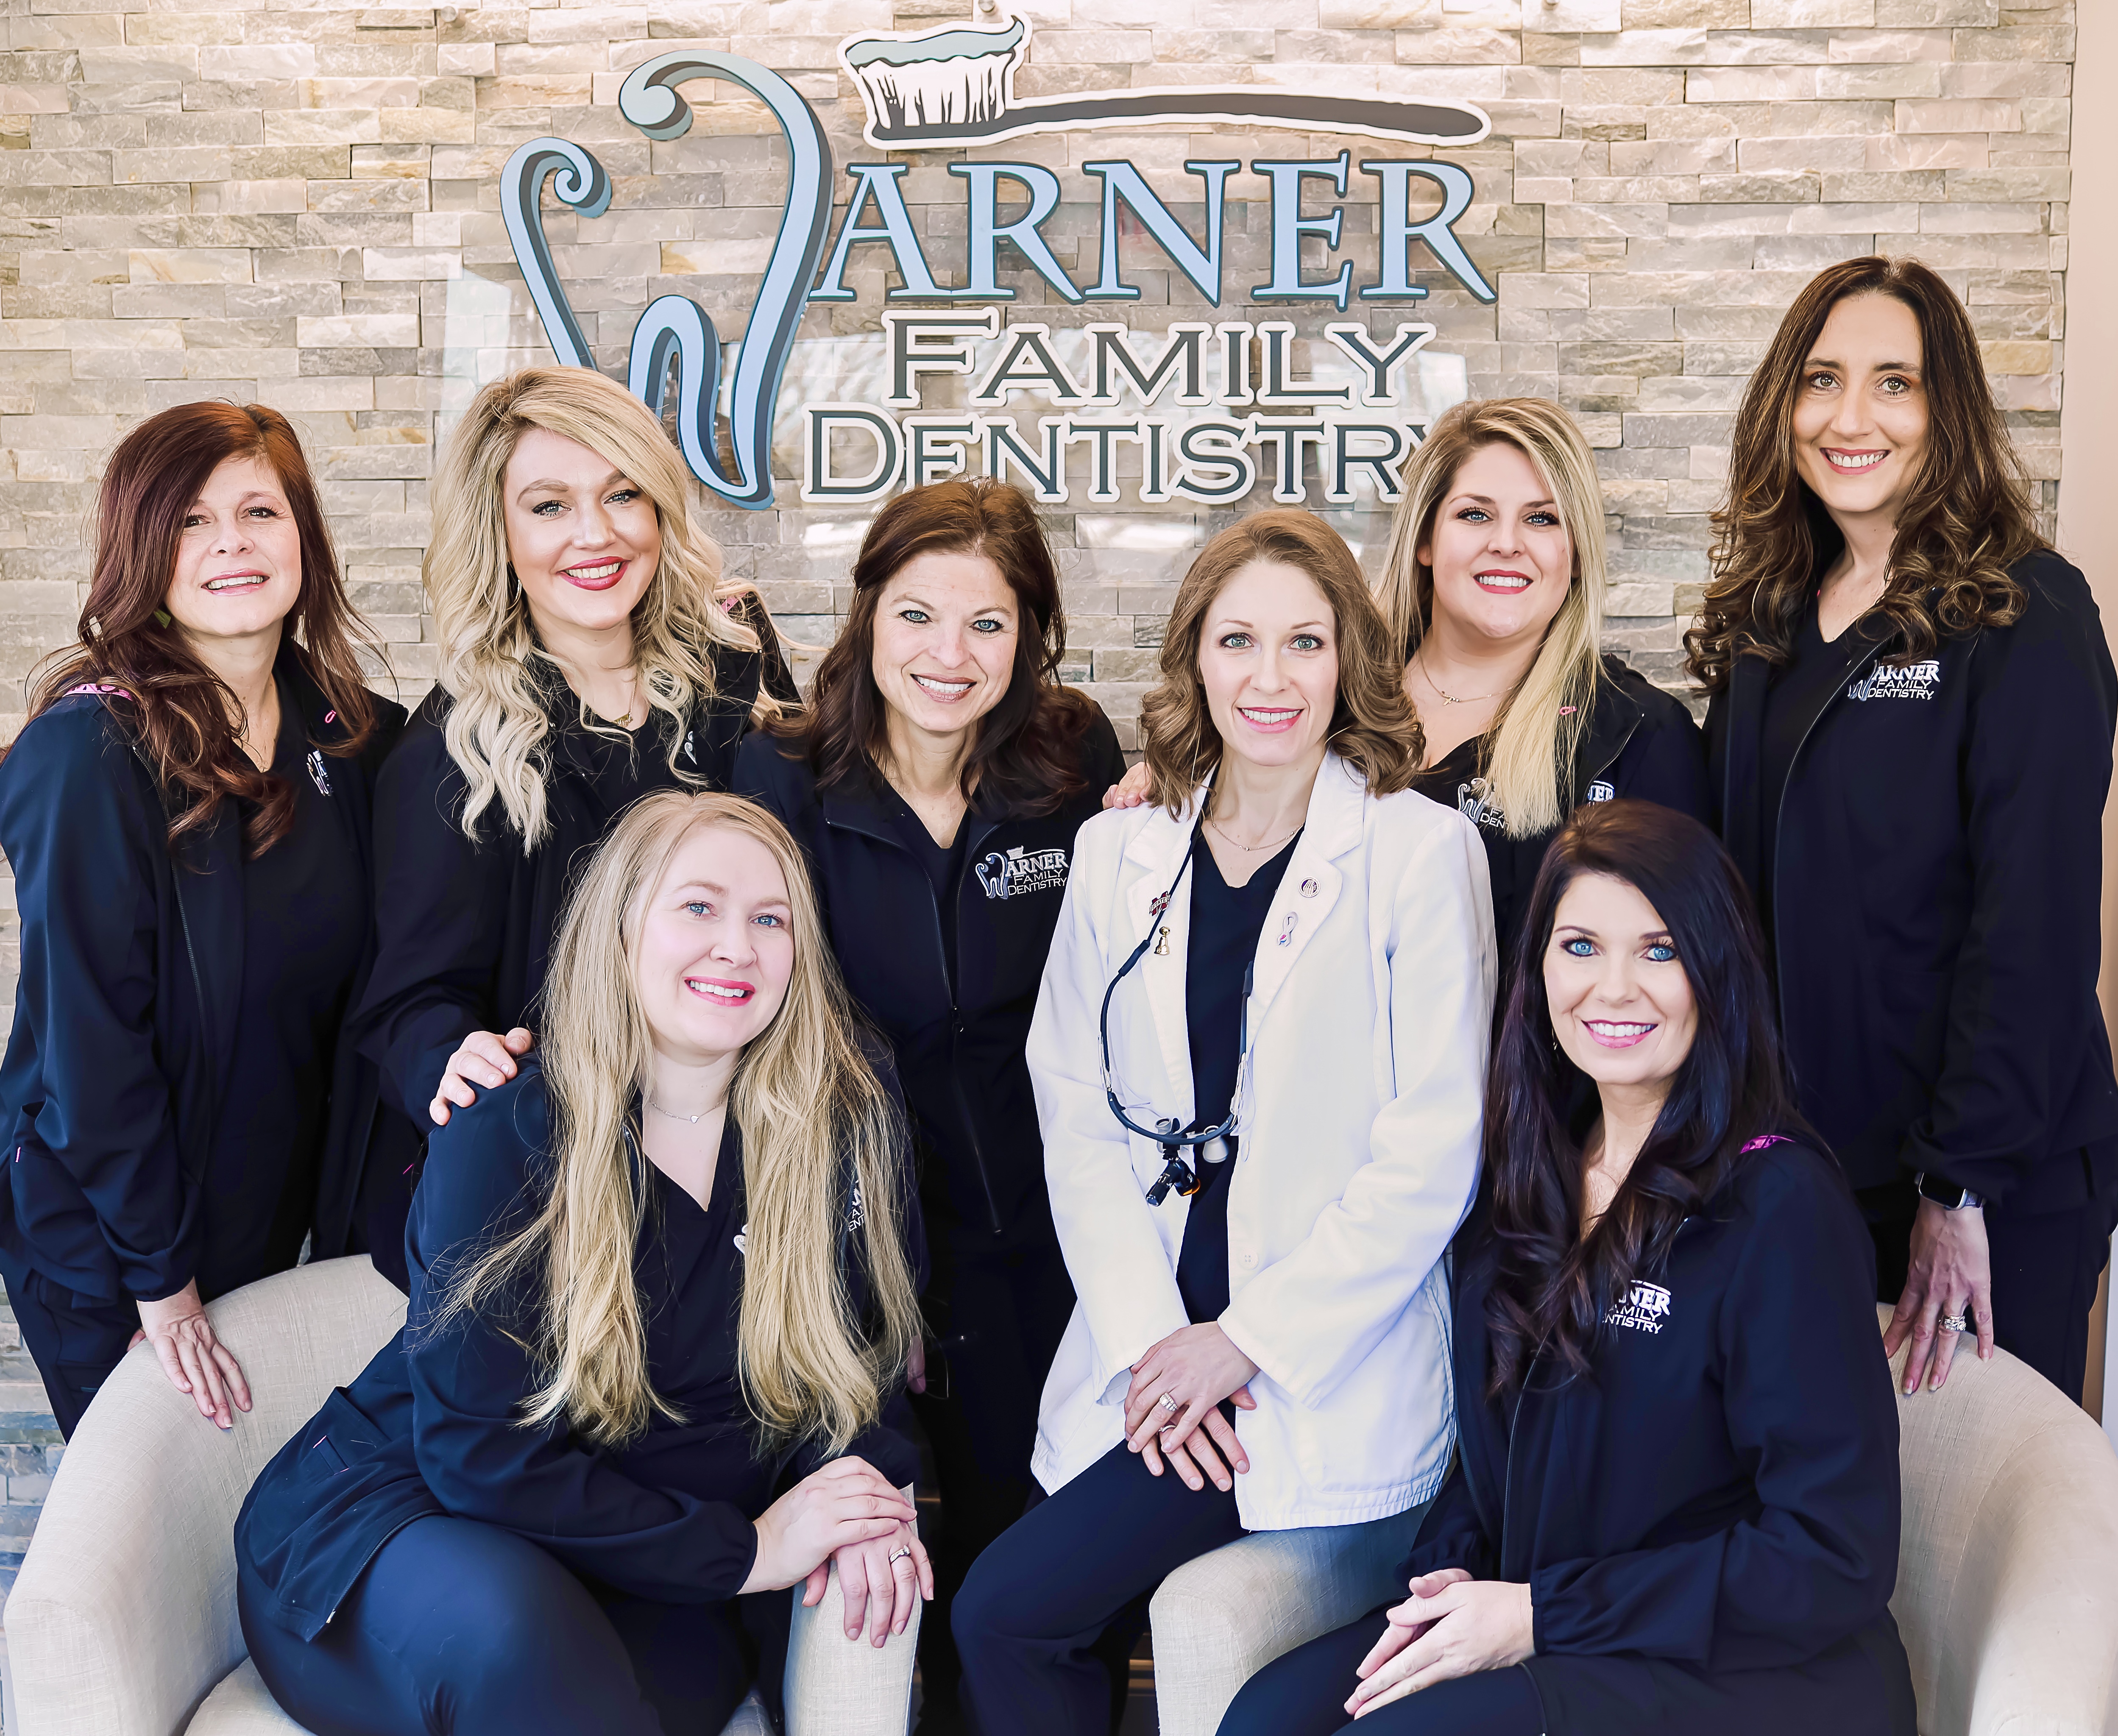  Warner Family Dentistry 